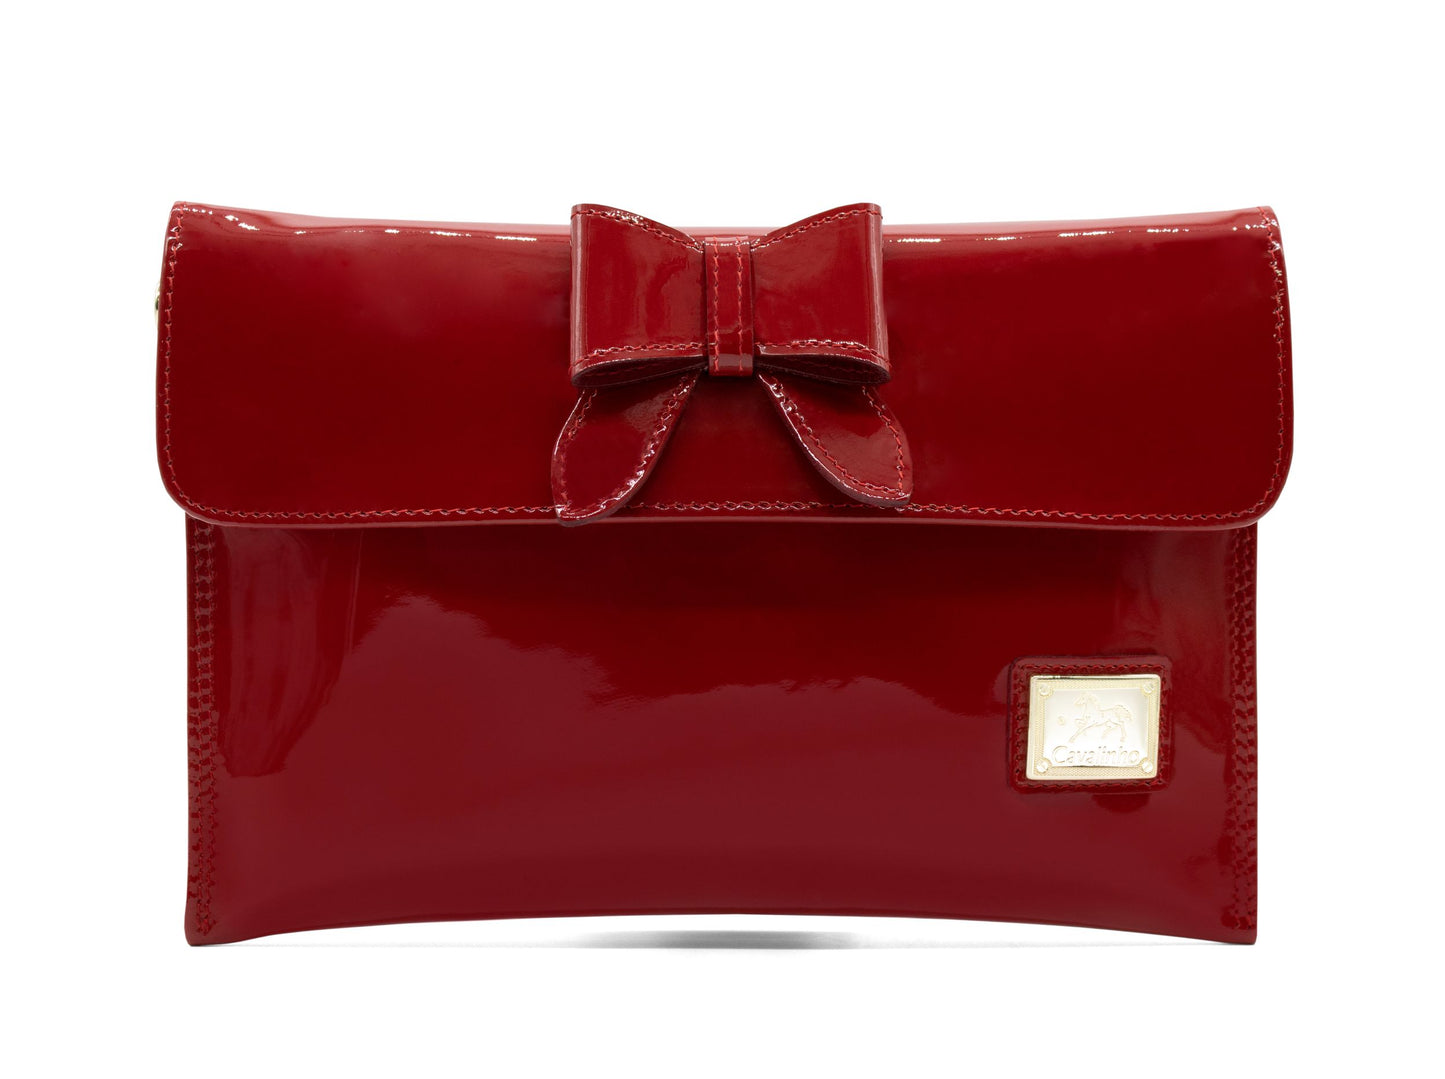 Cavalinho Patent Leather Clutch Bag - Red - 18090068.04_P1